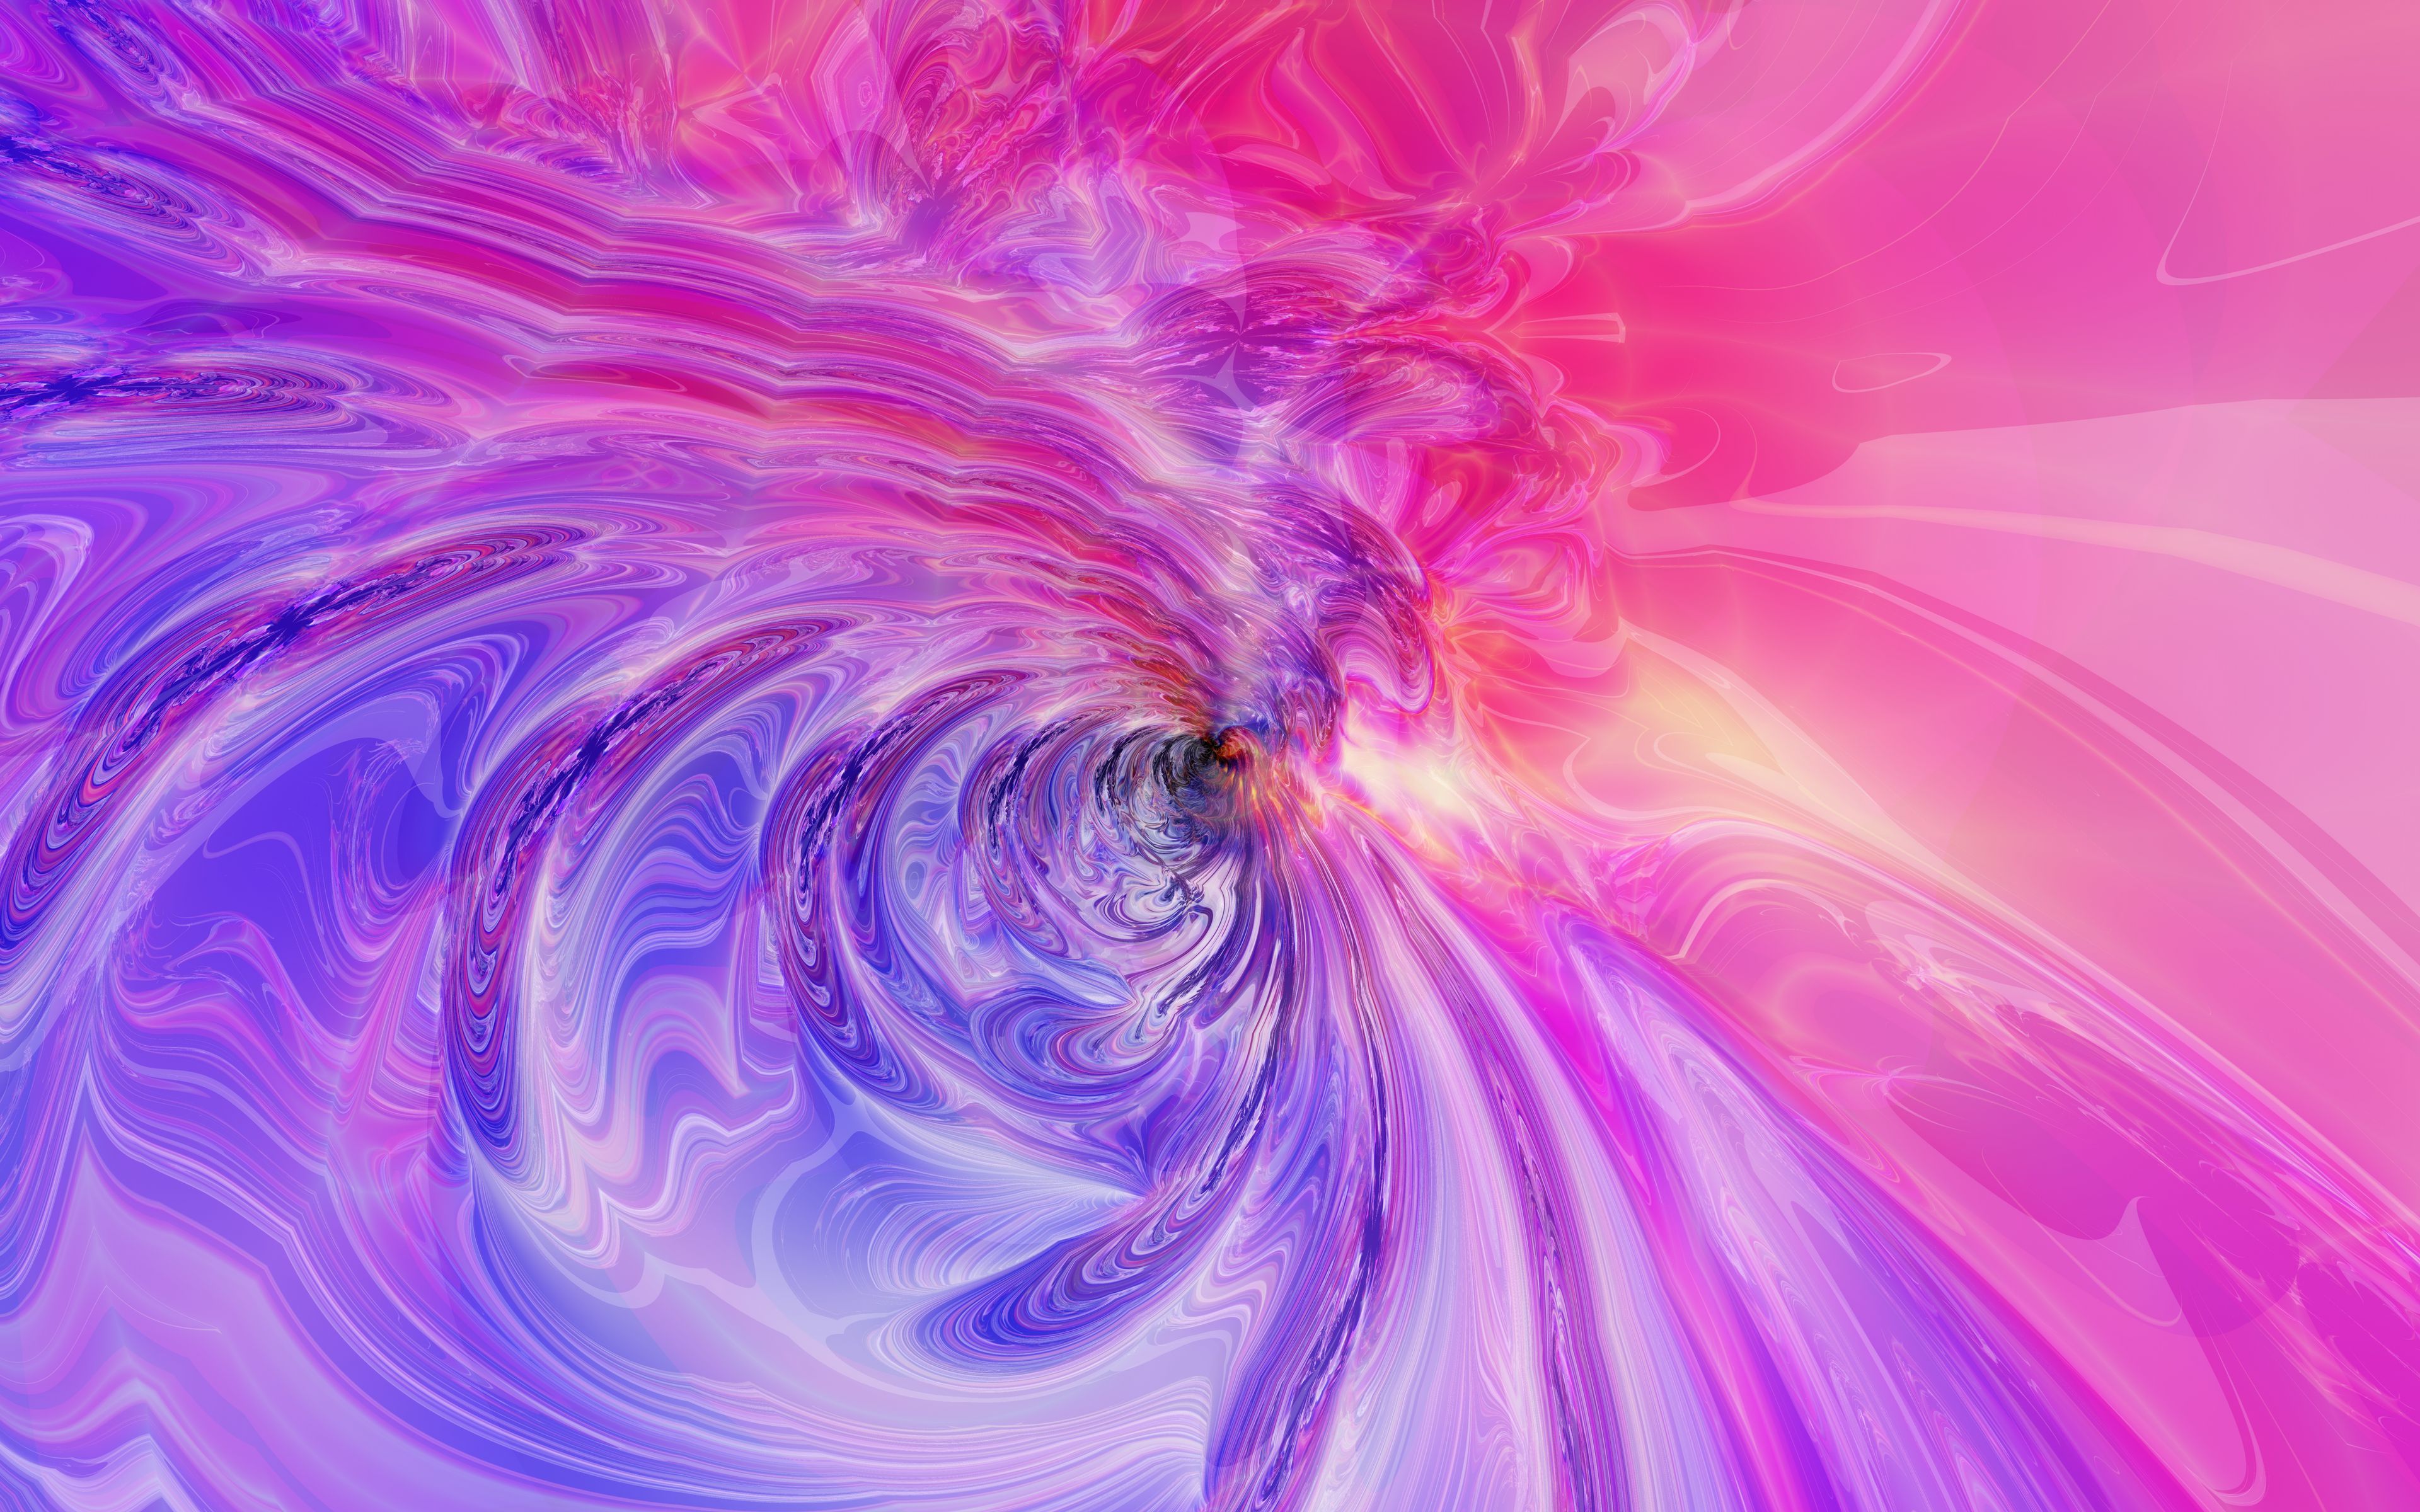 Purple and pink spiral Wallpaper 4k Ultra HD ID:8116